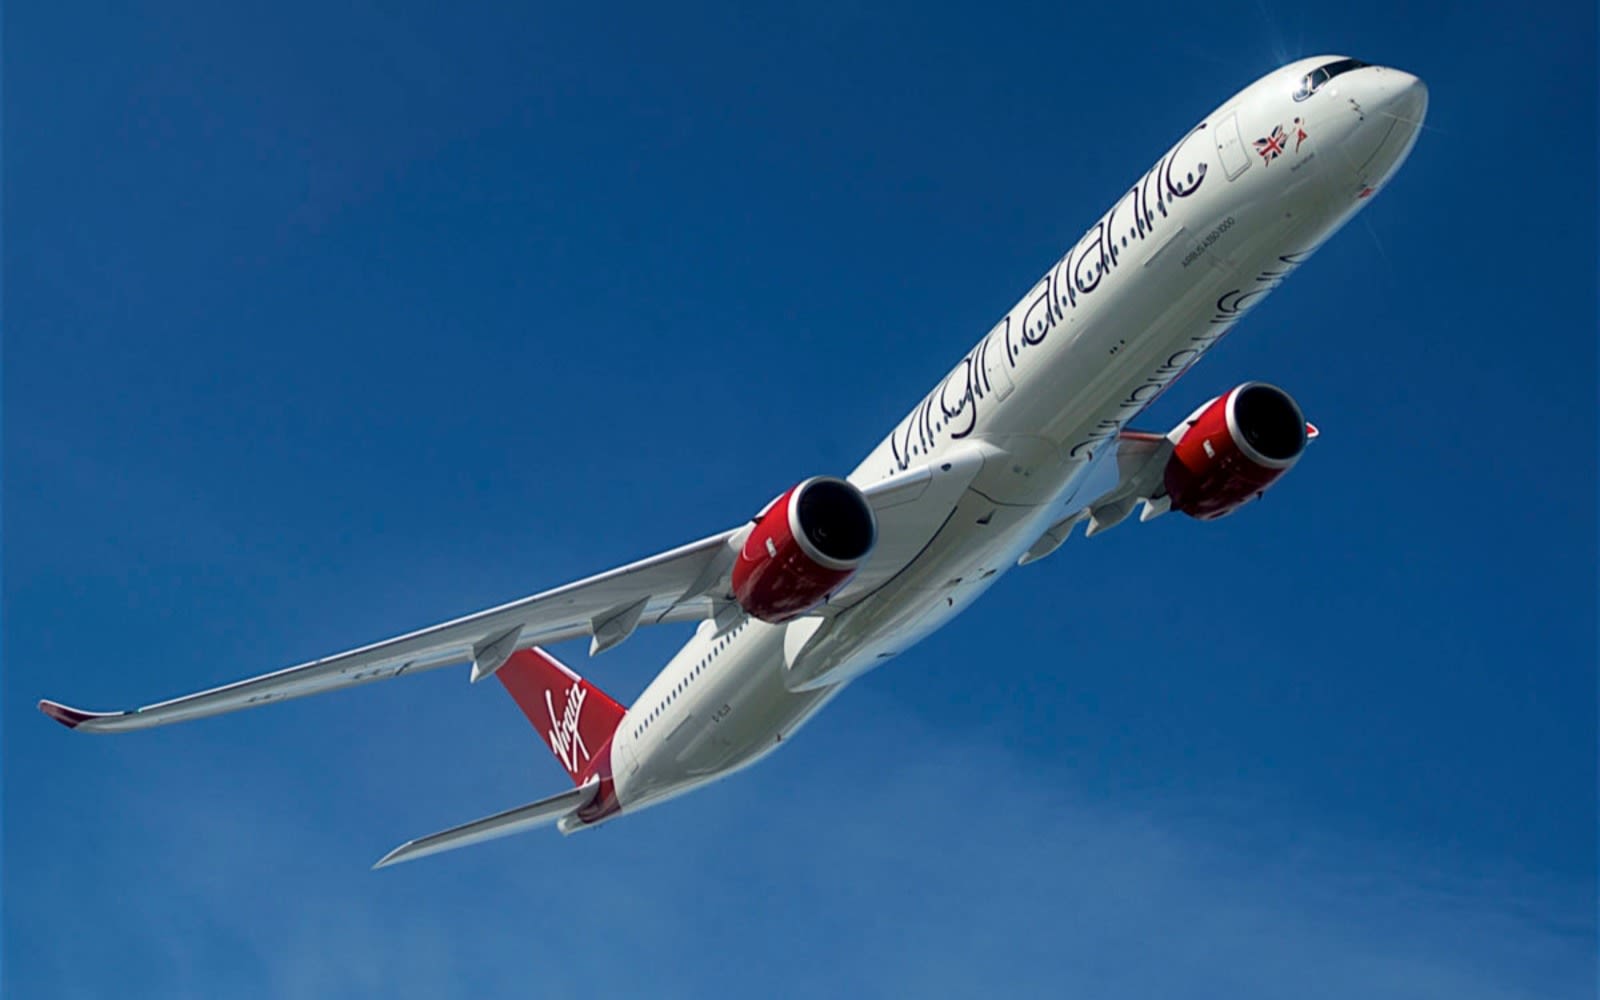 Image from Virgin Atlantic